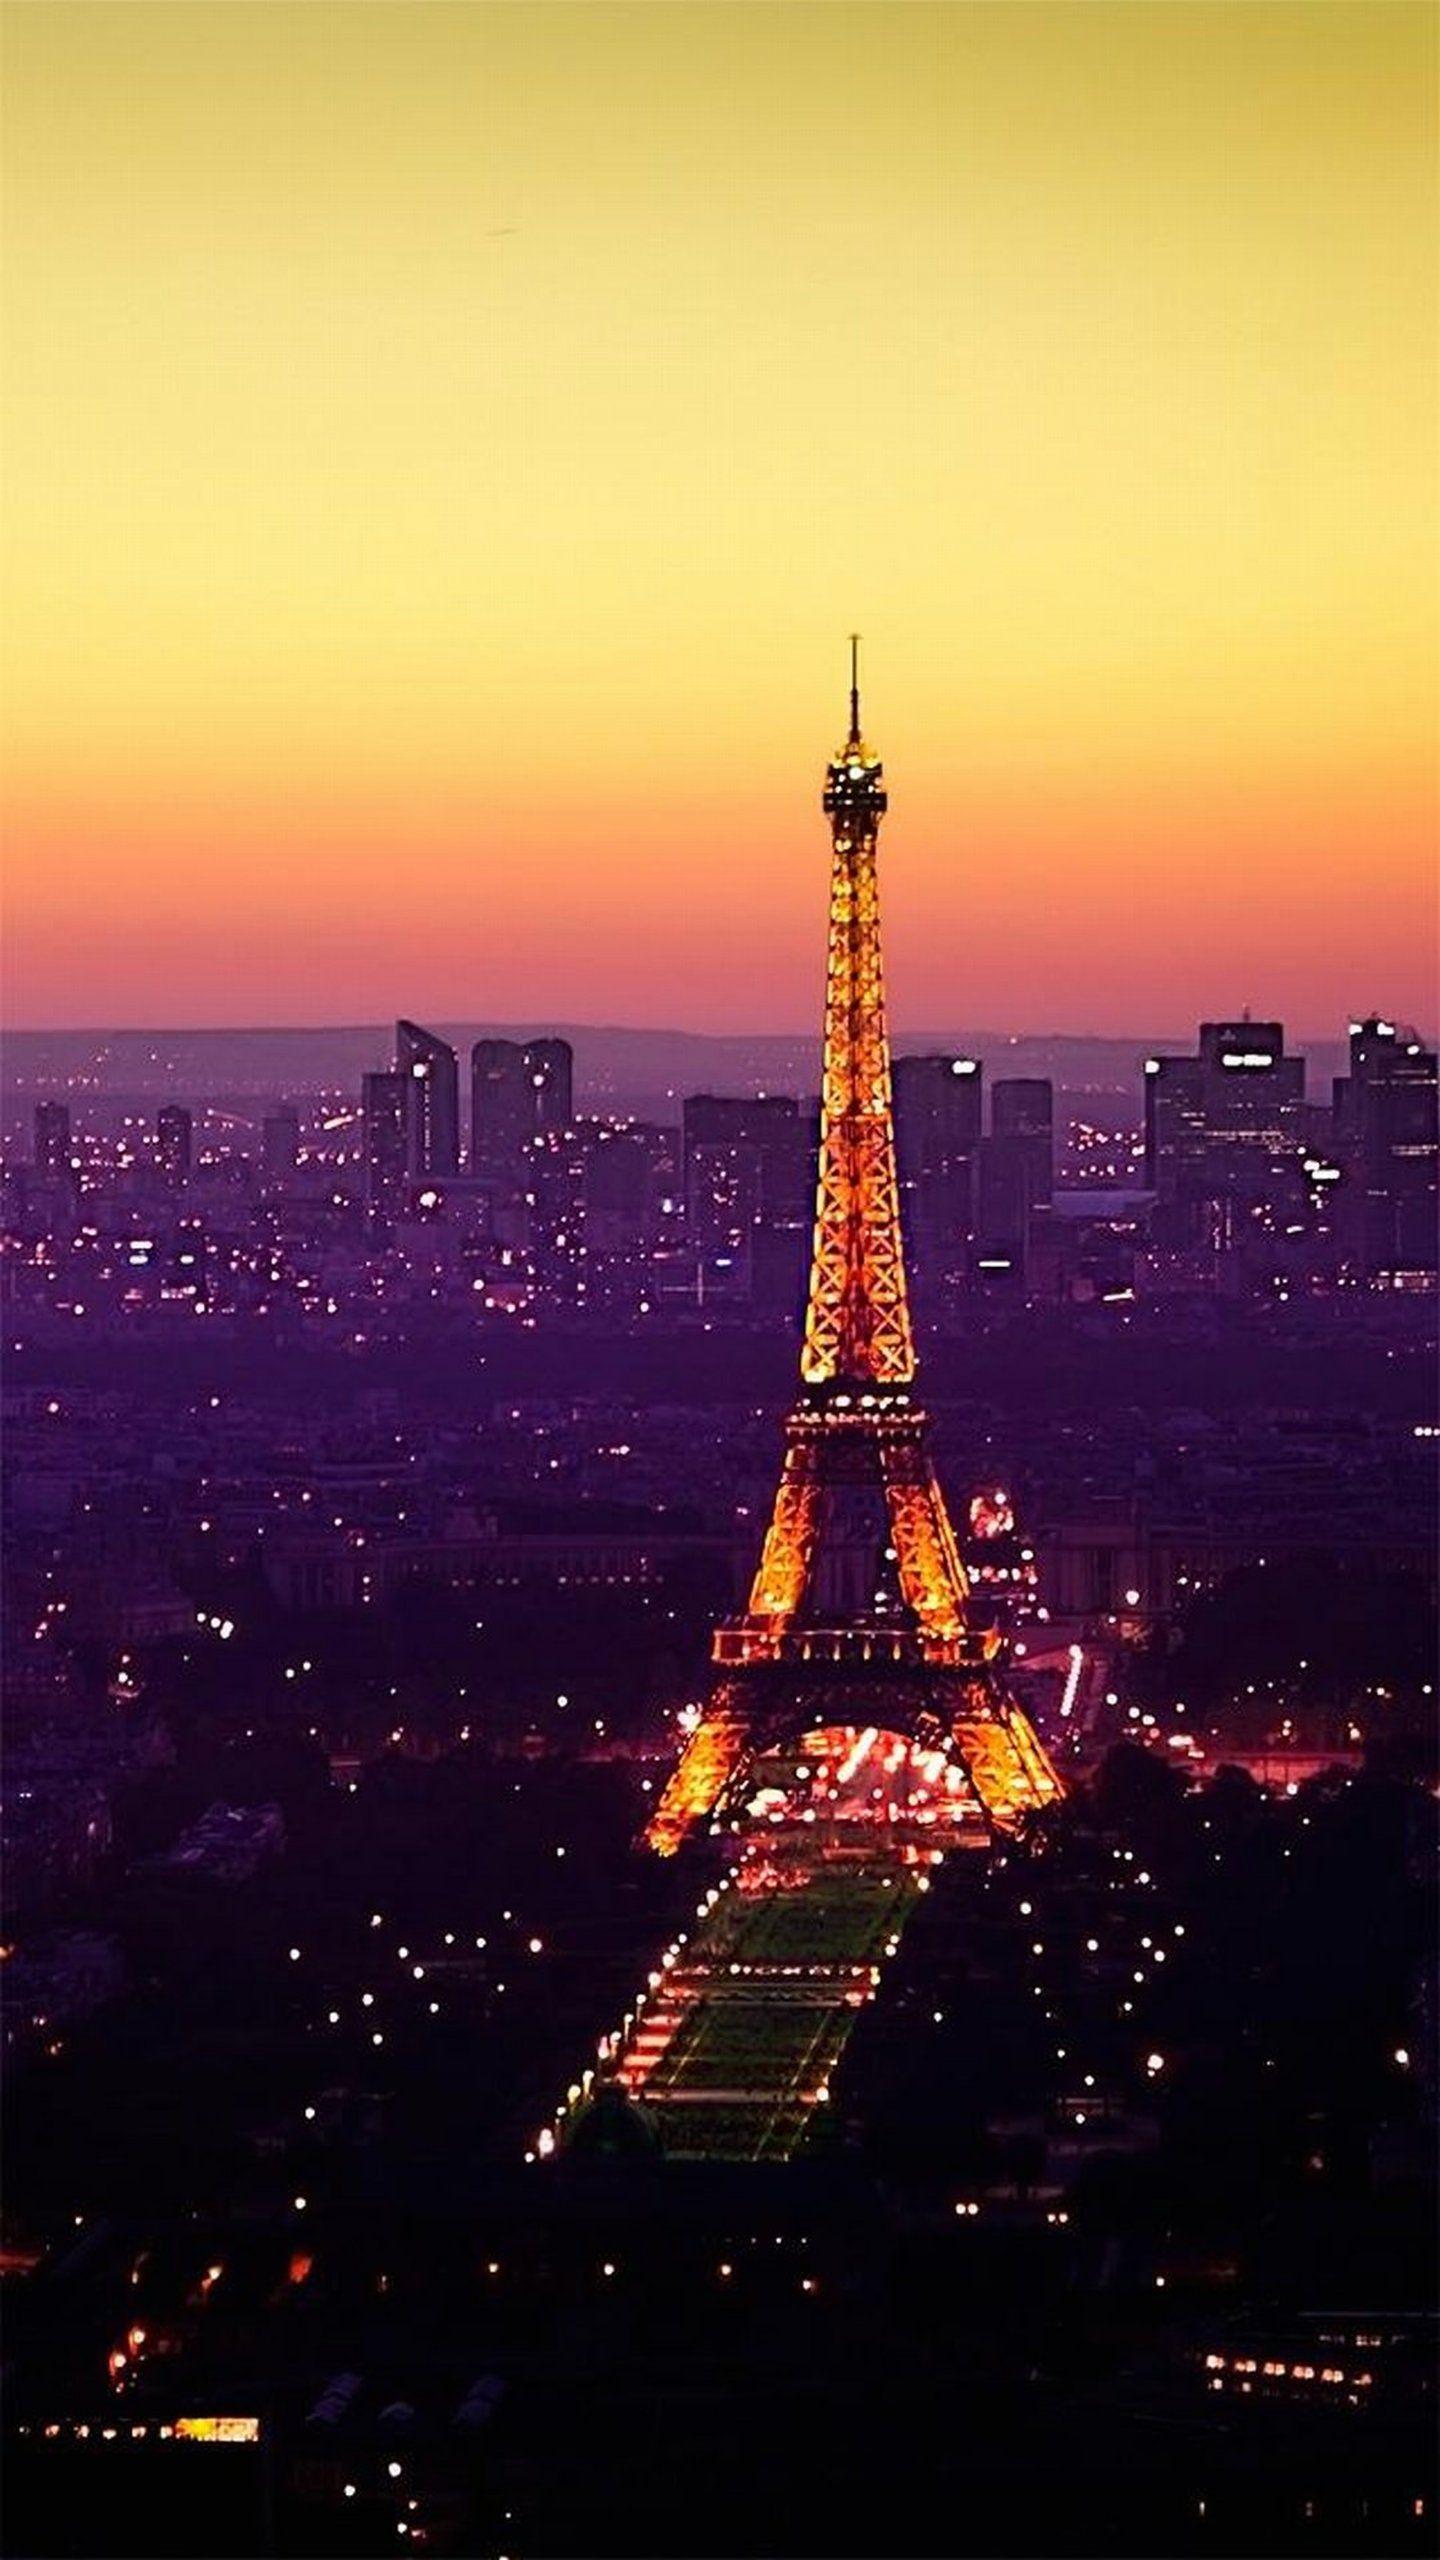 Wallpaper Lg G4 Eiffel Tower Paris Night 1440 2560 Qhd x